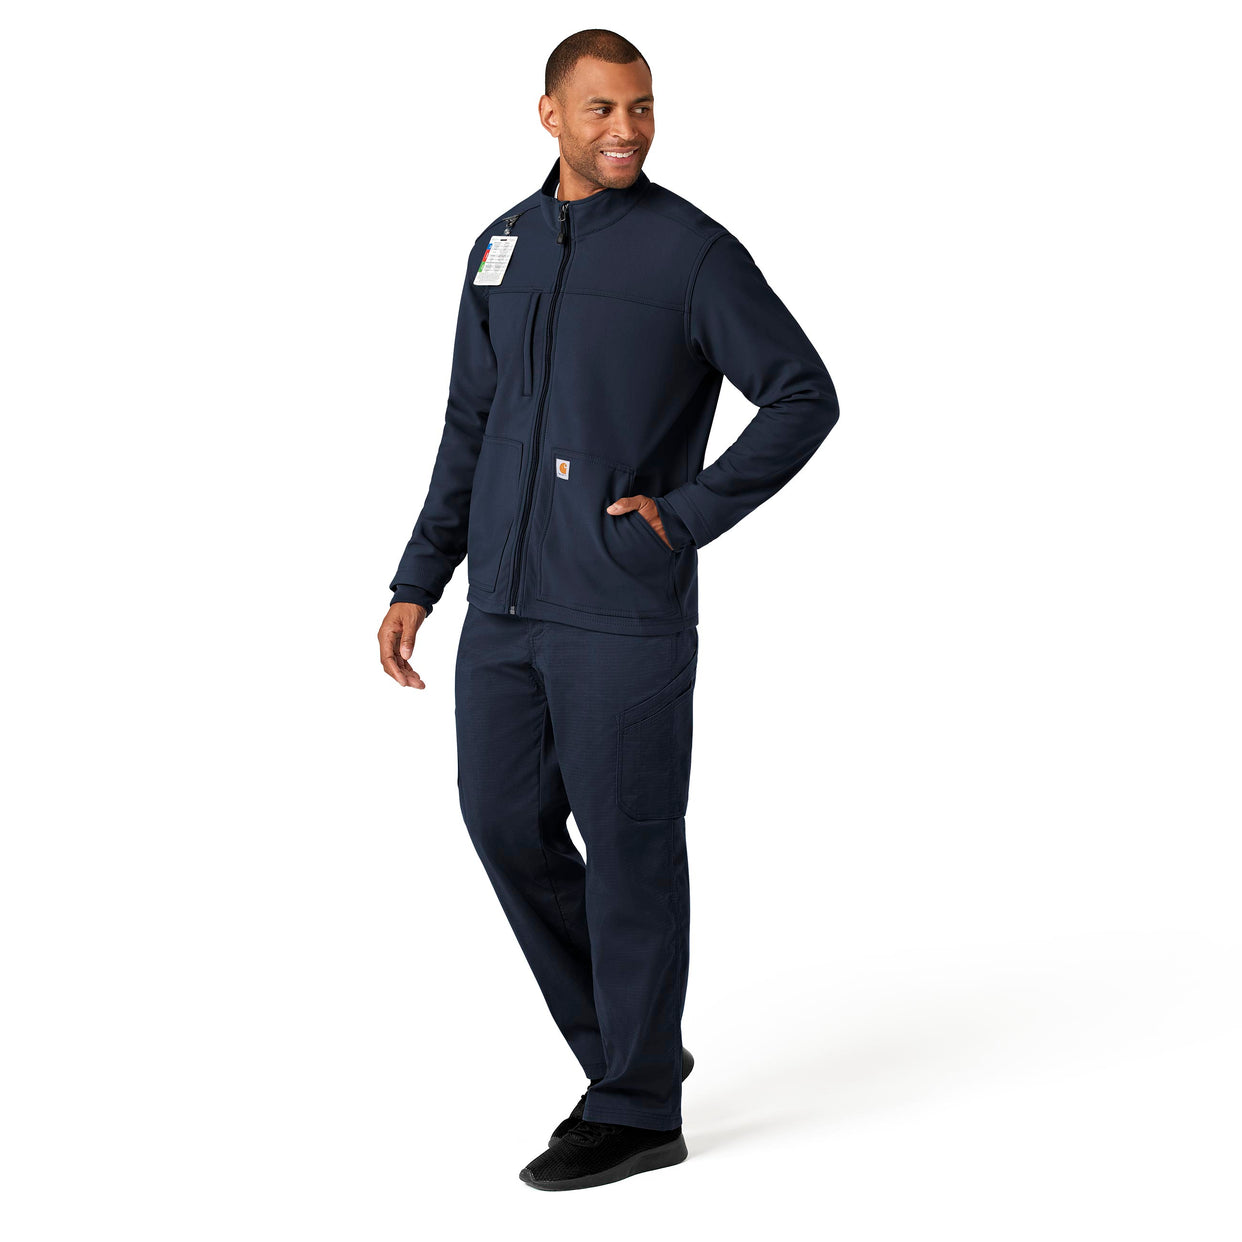 Rugged Flex Peak Men's Bonded Fleece Jacket Navy full scrub set